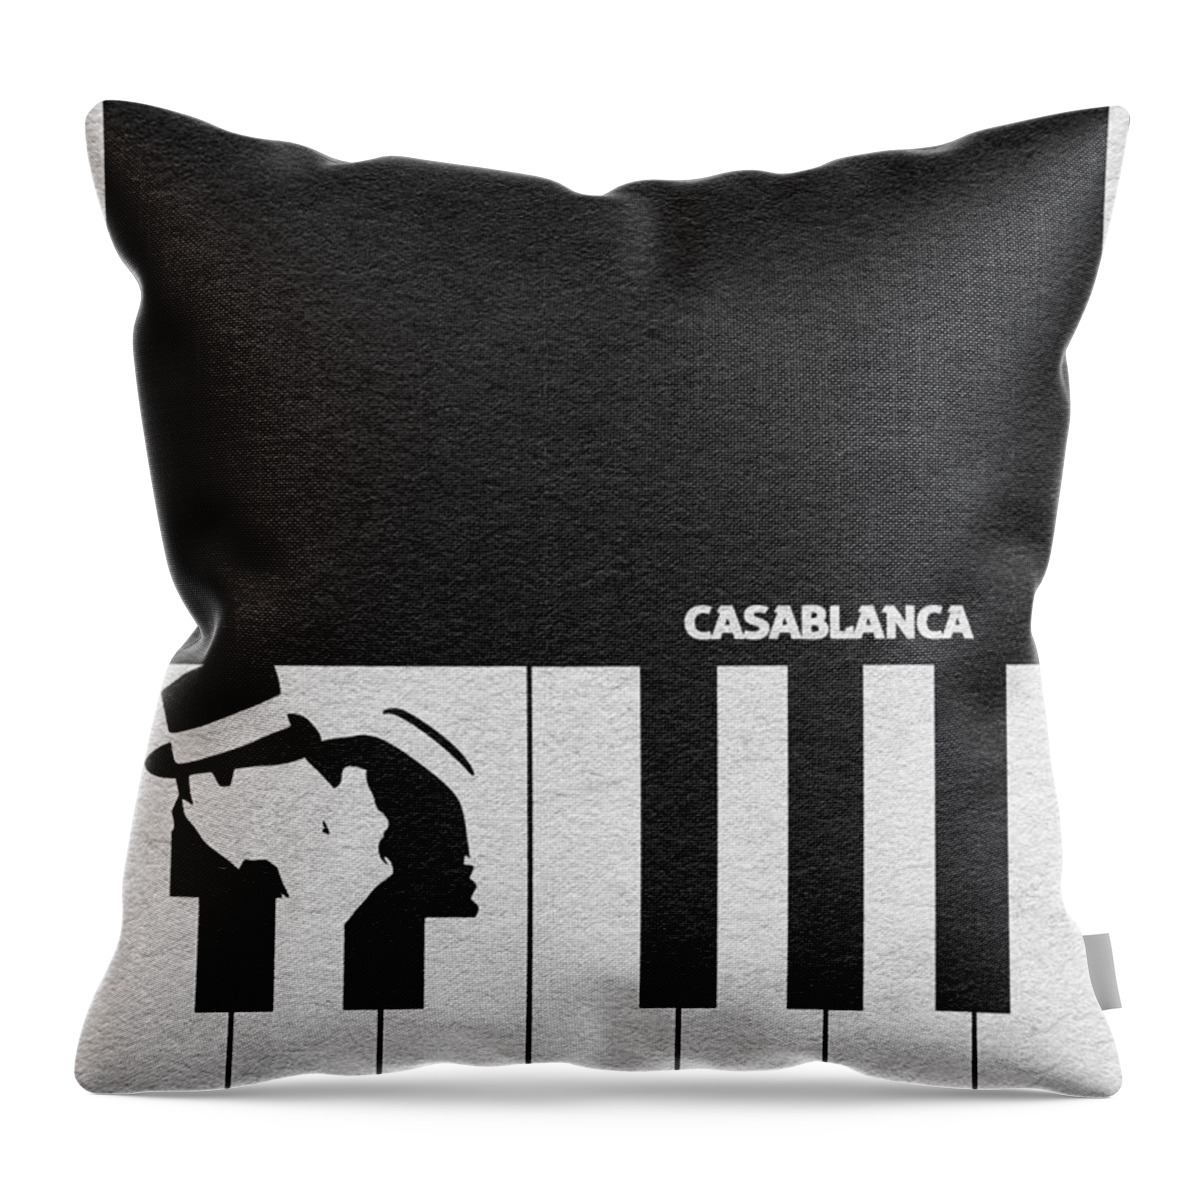 Casablanca Throw Pillow featuring the digital art Casablanca by Inspirowl Design